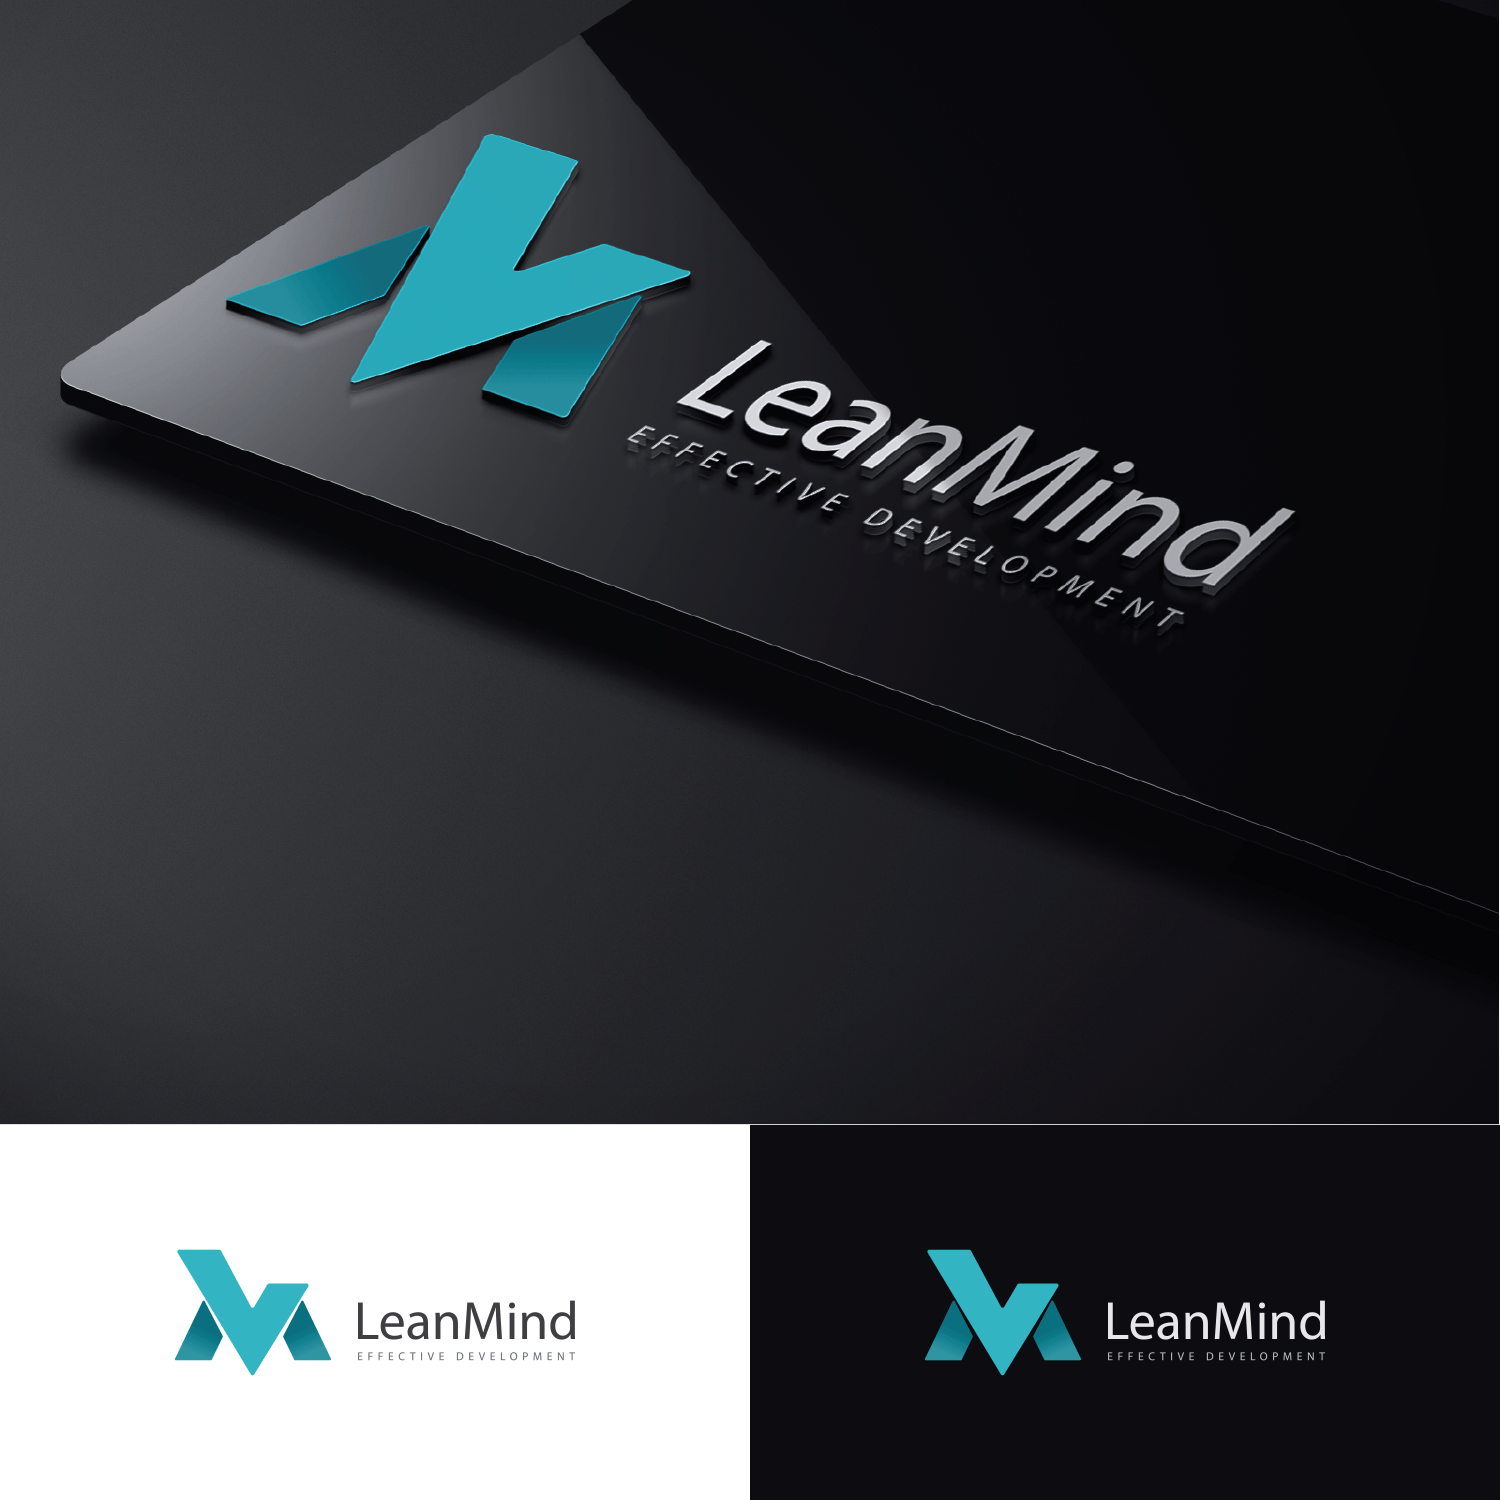 Ble Logo - Bold, Serious, Software Development Logo Design for LeanMind